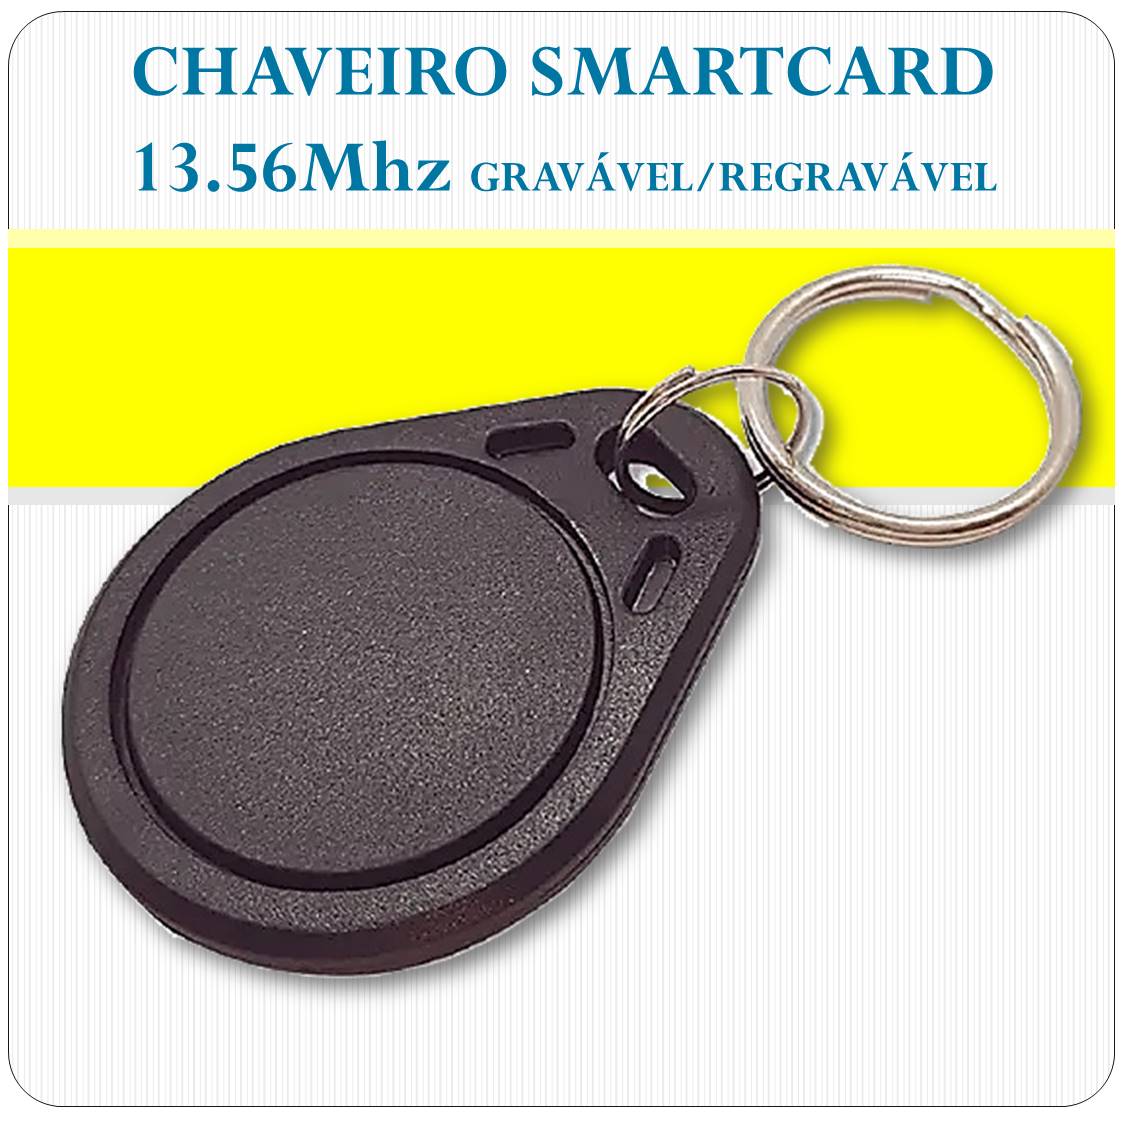 Chaveiro Tag Smart Card - Gravável/Regravável